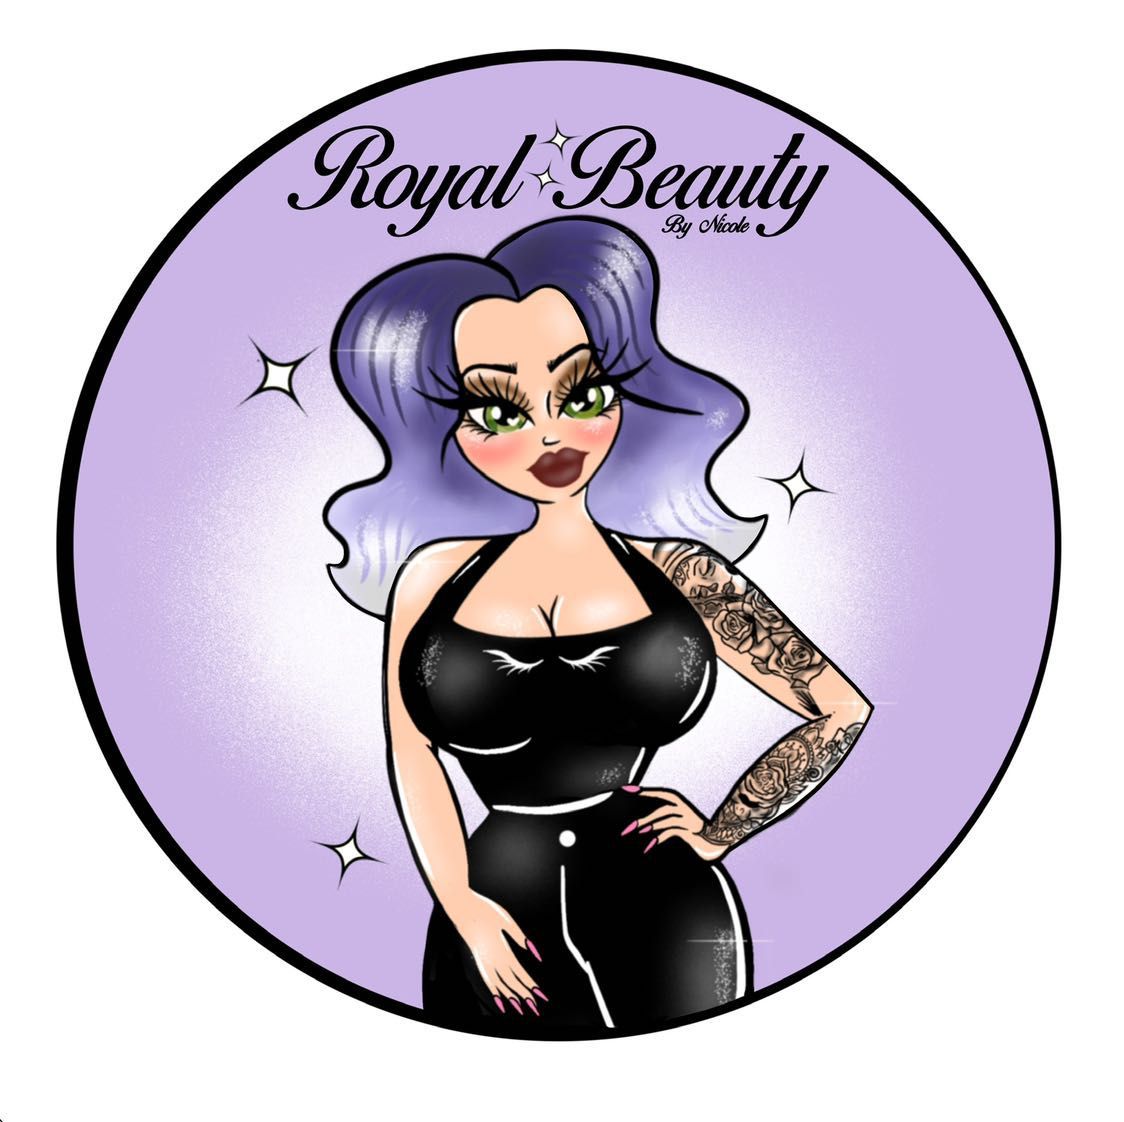 Royal Beauty by Nicole, 39366 Fremont Blvd, Fremont, 94538